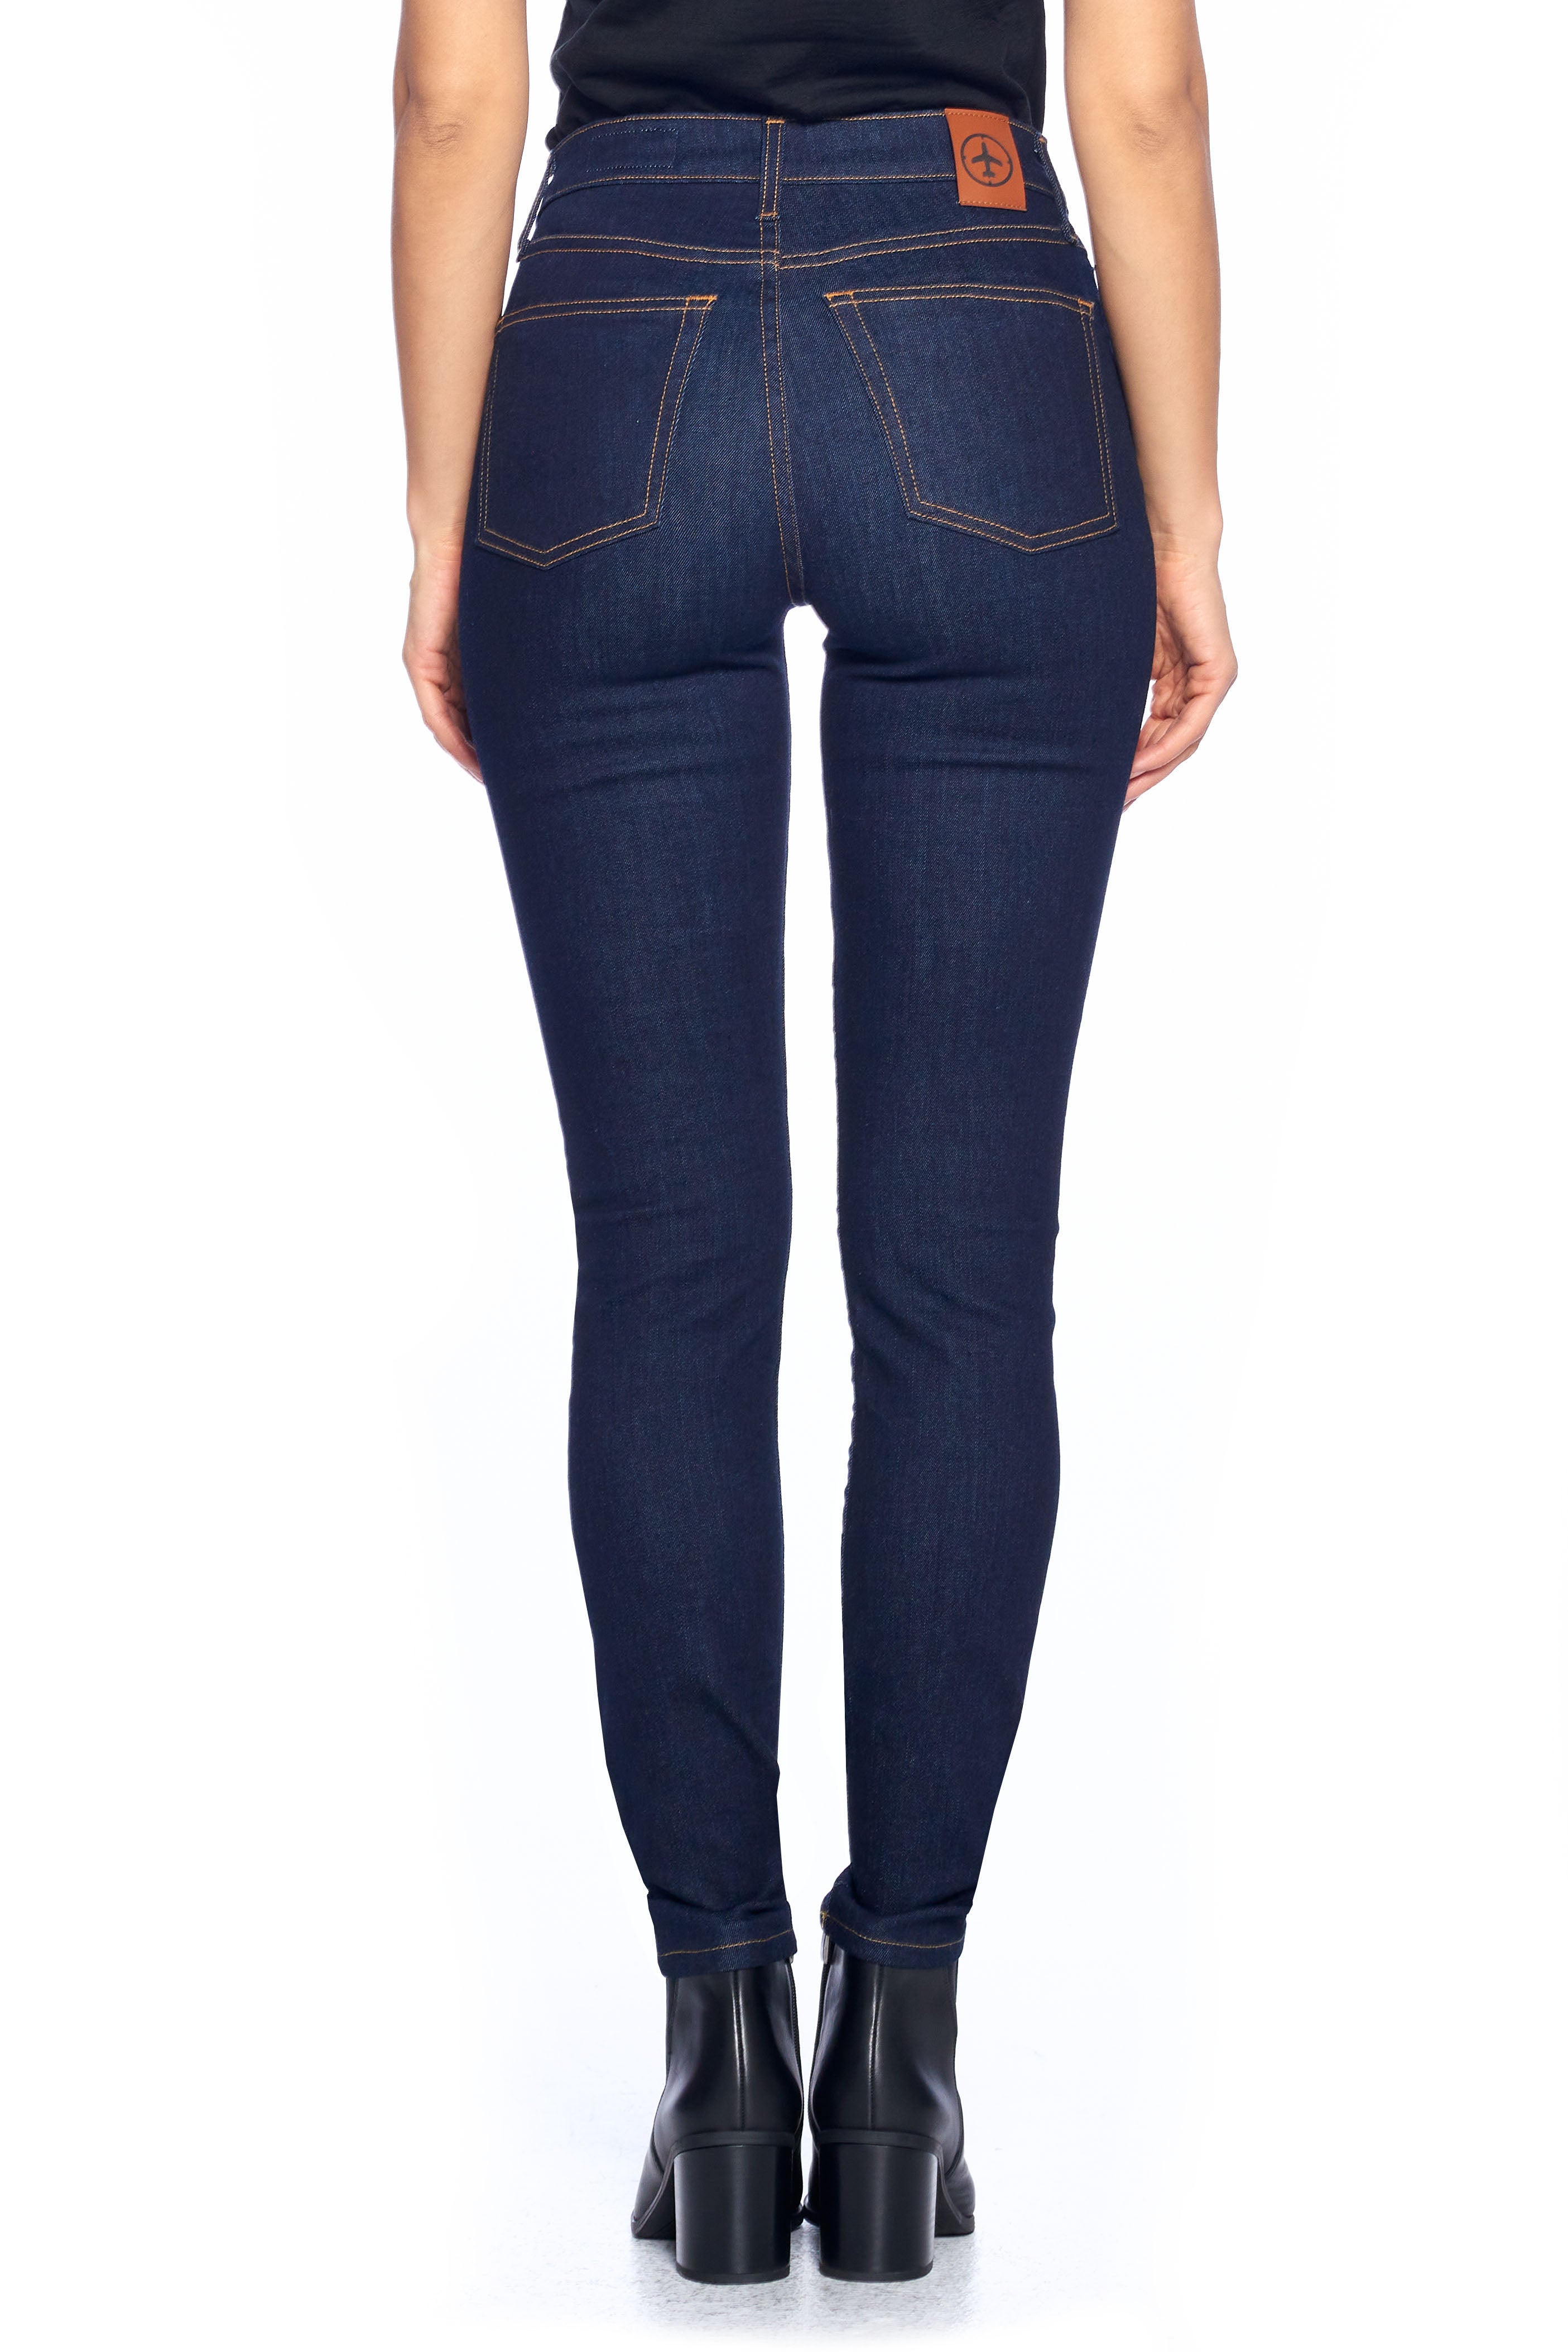 Women's Skinny Fit Jeans | Dark Indigo | Made in the USA - Aviator